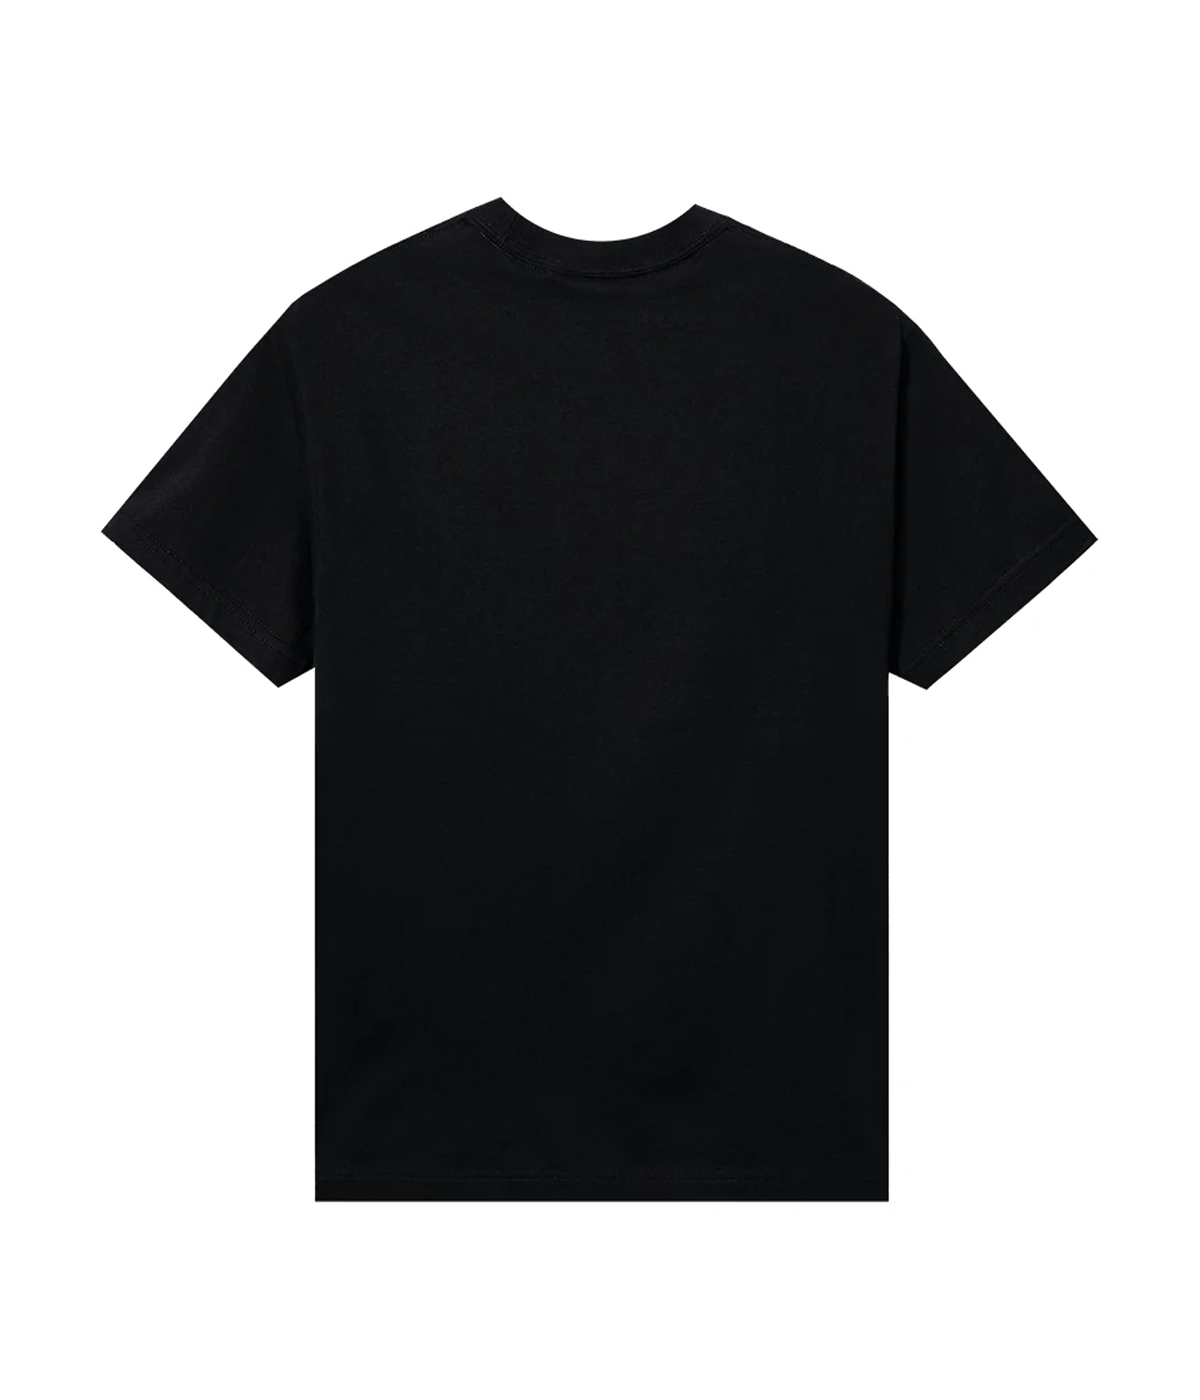 Call Me 917 Ball Is Life T-shirt Black 2